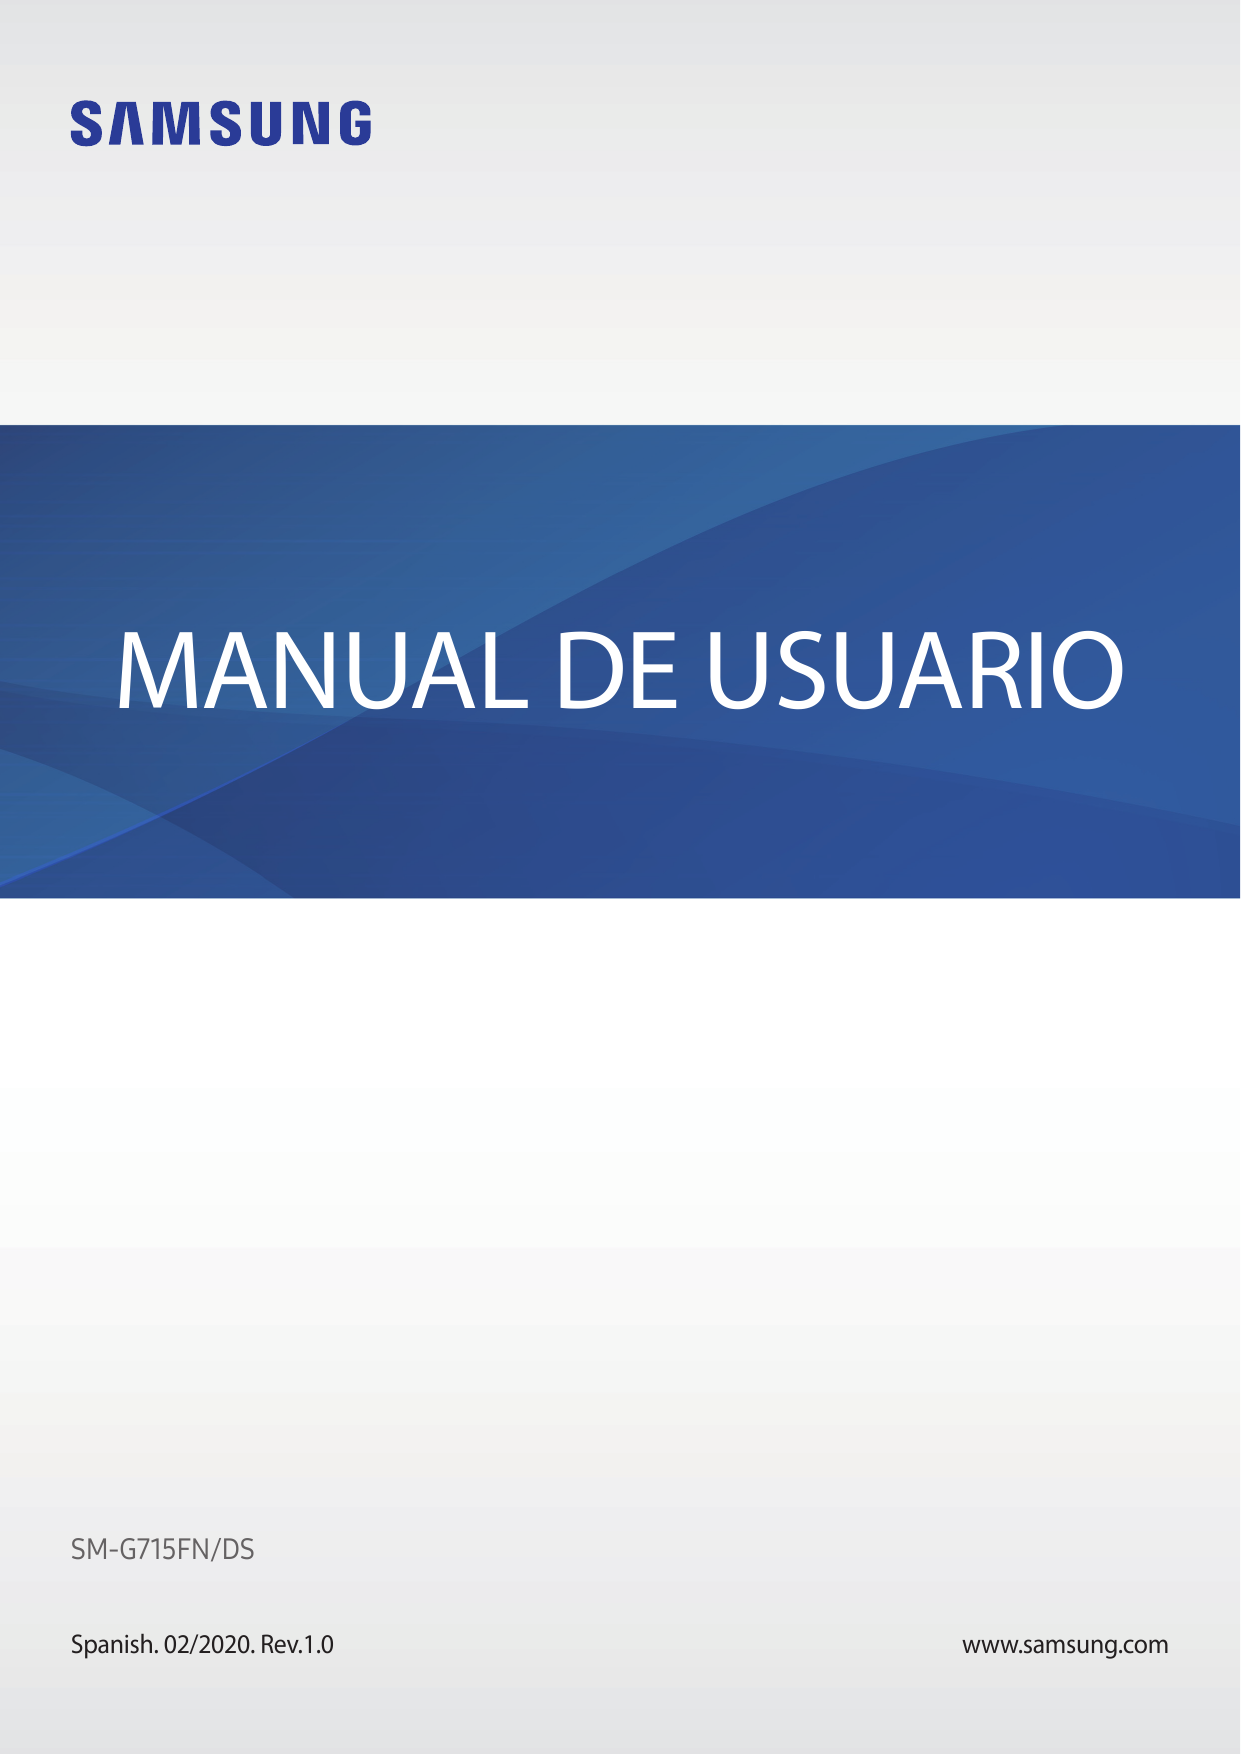 MANUAL DE USUARIOSM-G715FN/DSSpanish. 02/2020. Rev.1.0www.samsung.com